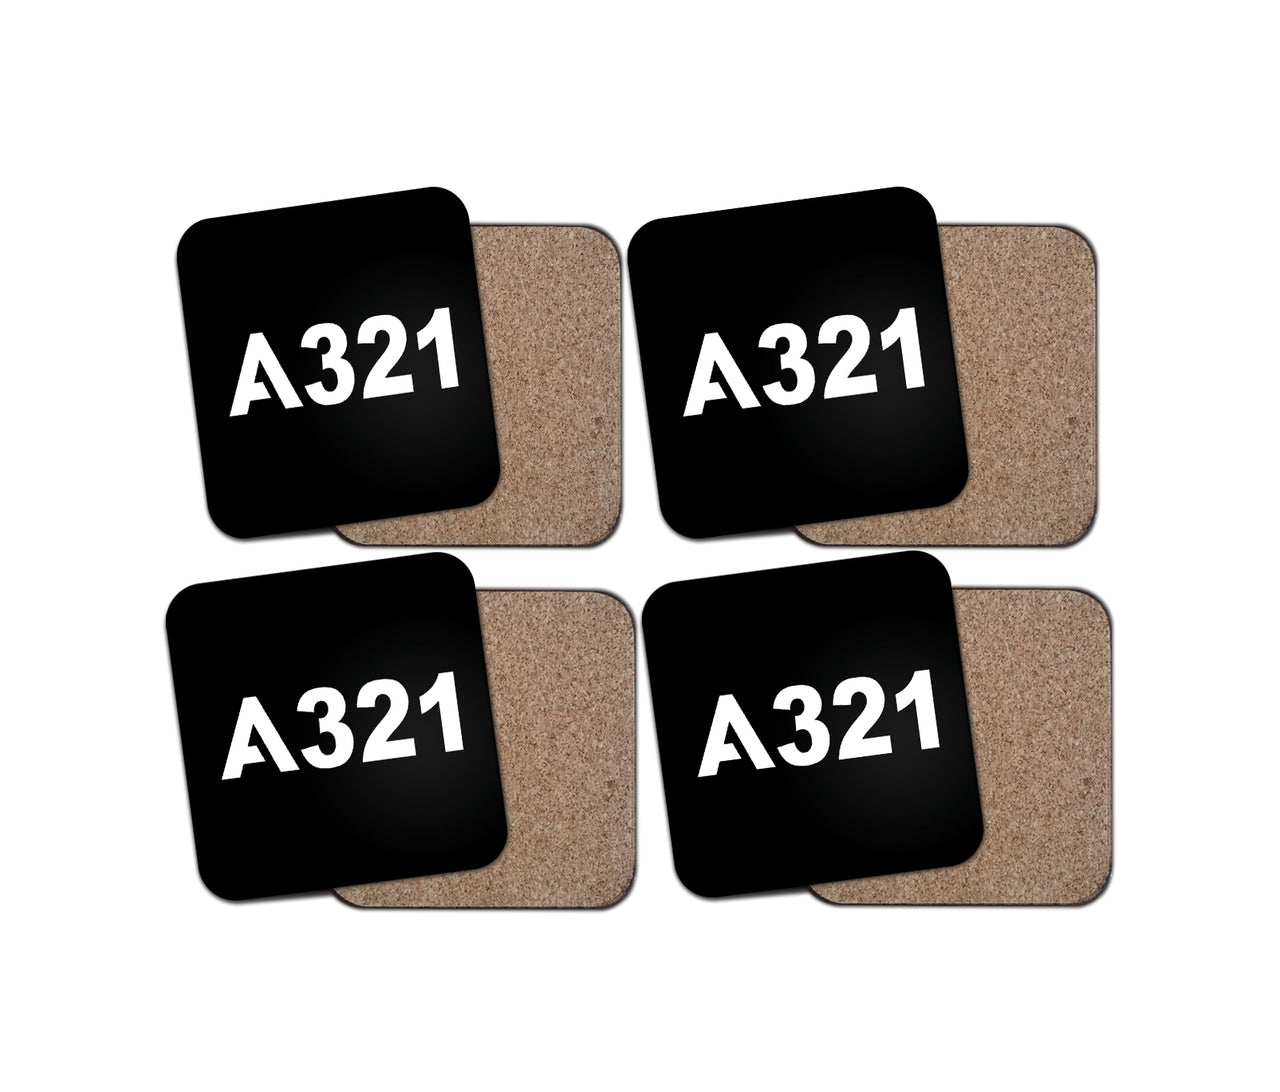 A321 Flat Text Designed Coasters